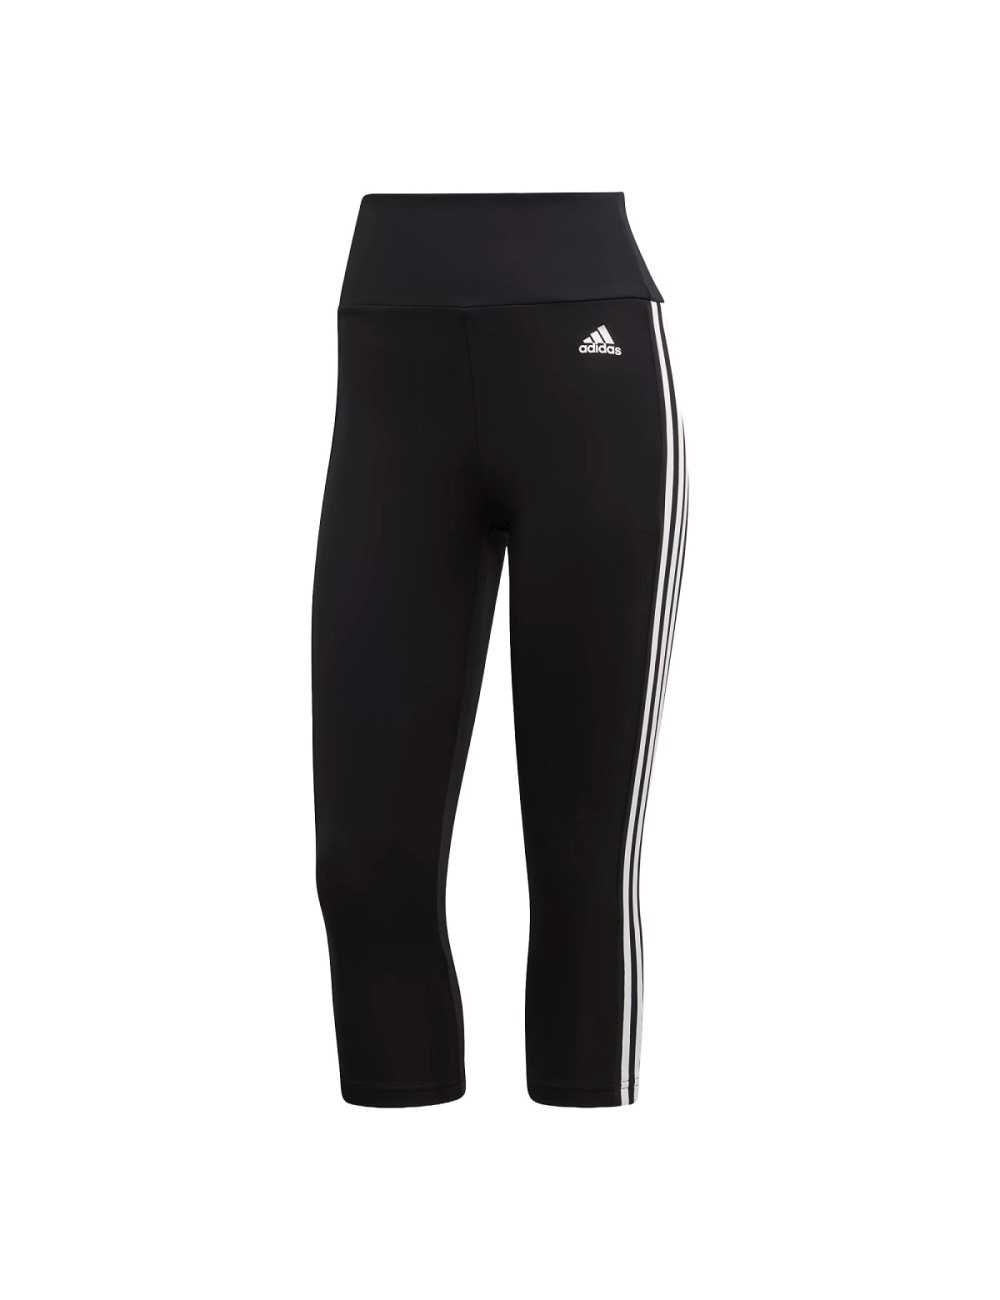 Adidas Leggings nero 3-stripes 3/4 donna slim fit - Jeans & Pantaloni Donna